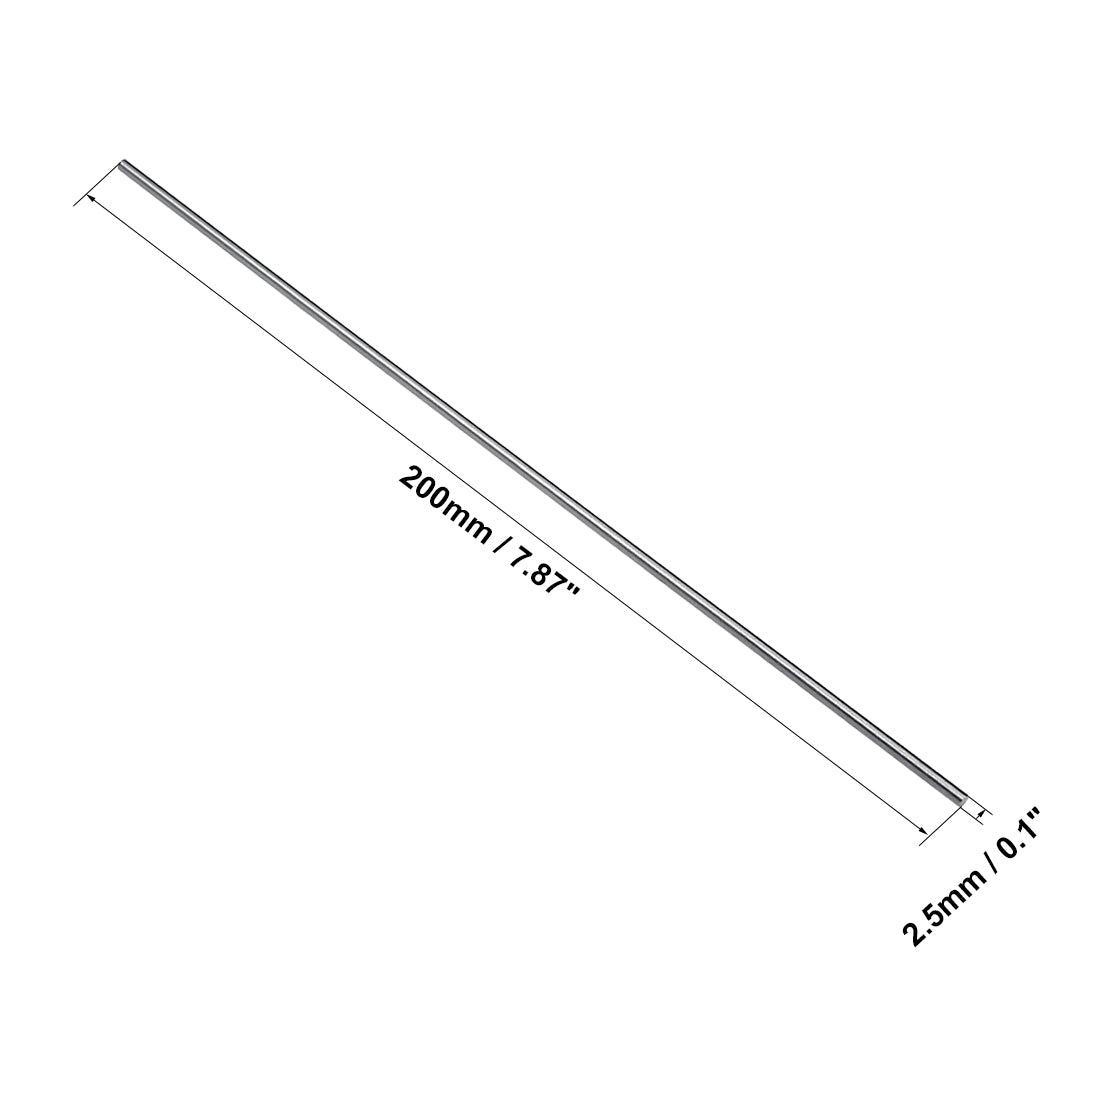 uxcell Uxcell Round Rod 200mm Length HSS Lathe Bar Stock DIY Craft Tool 2 Pcs